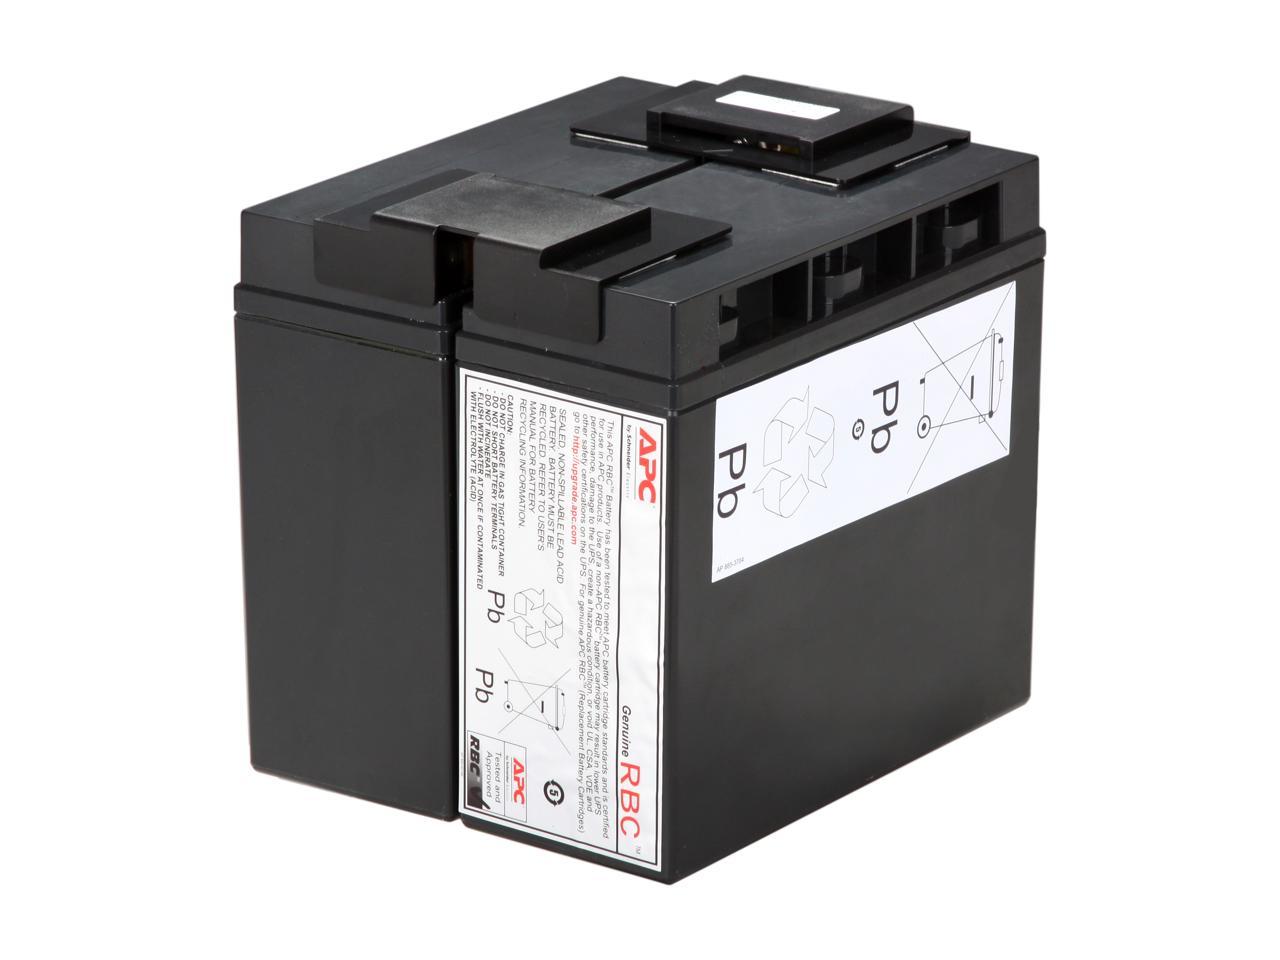 APC UPS Battery Replacement for APC Smart-UPS Model SMT1500, SMT1500C,  SMT1500US, SUA1500, SUA1500US and select others (RBC7)